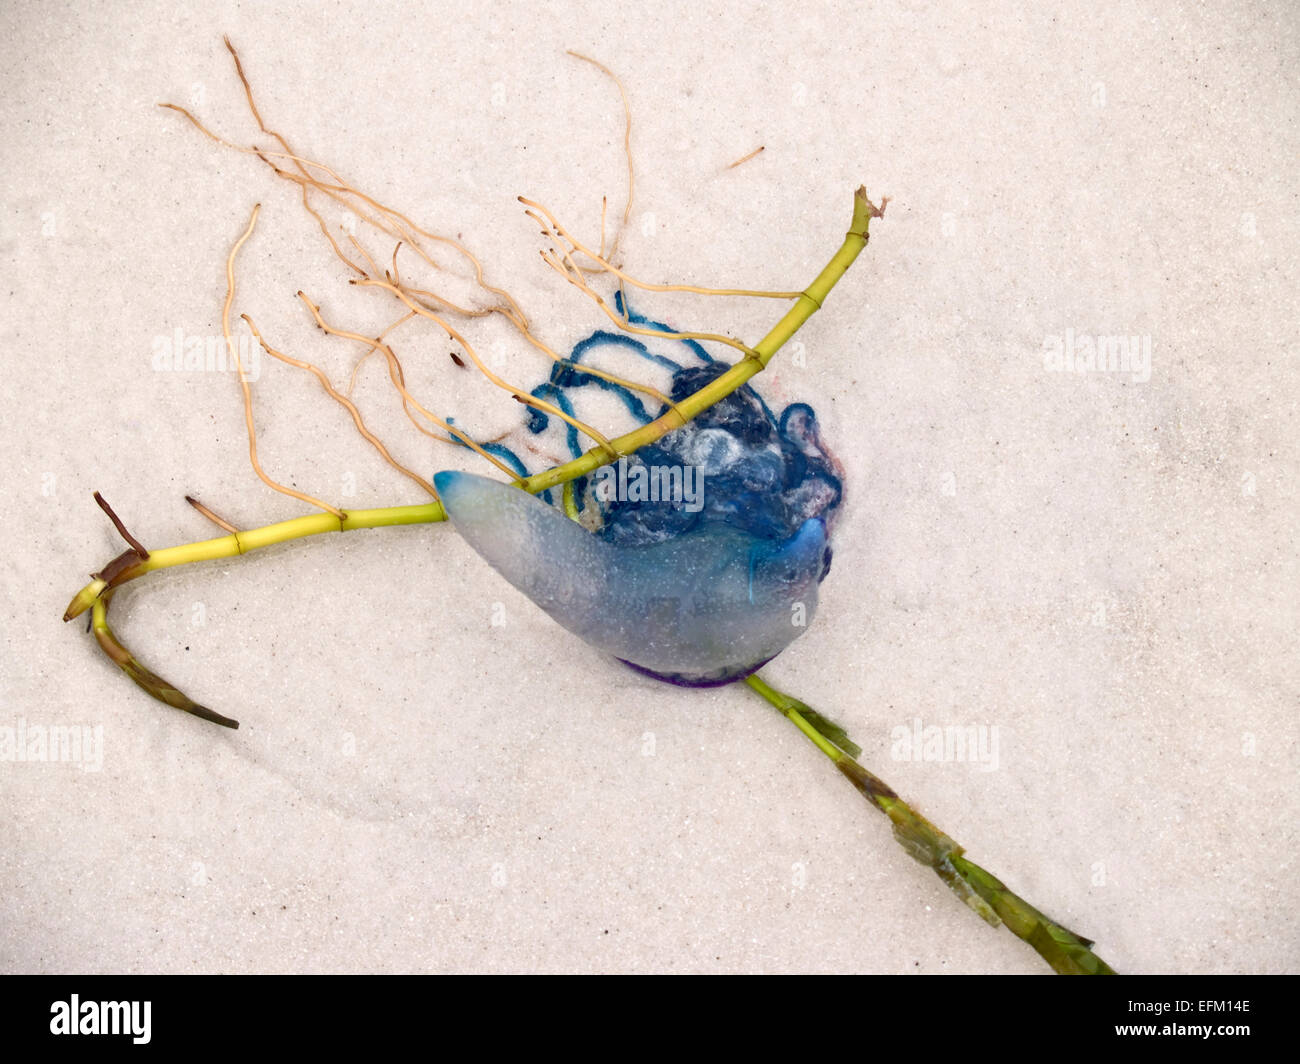 Man o' War portuguesa (Physalia physalis) o Bluebottle medusas y algas en la playa Foto de stock